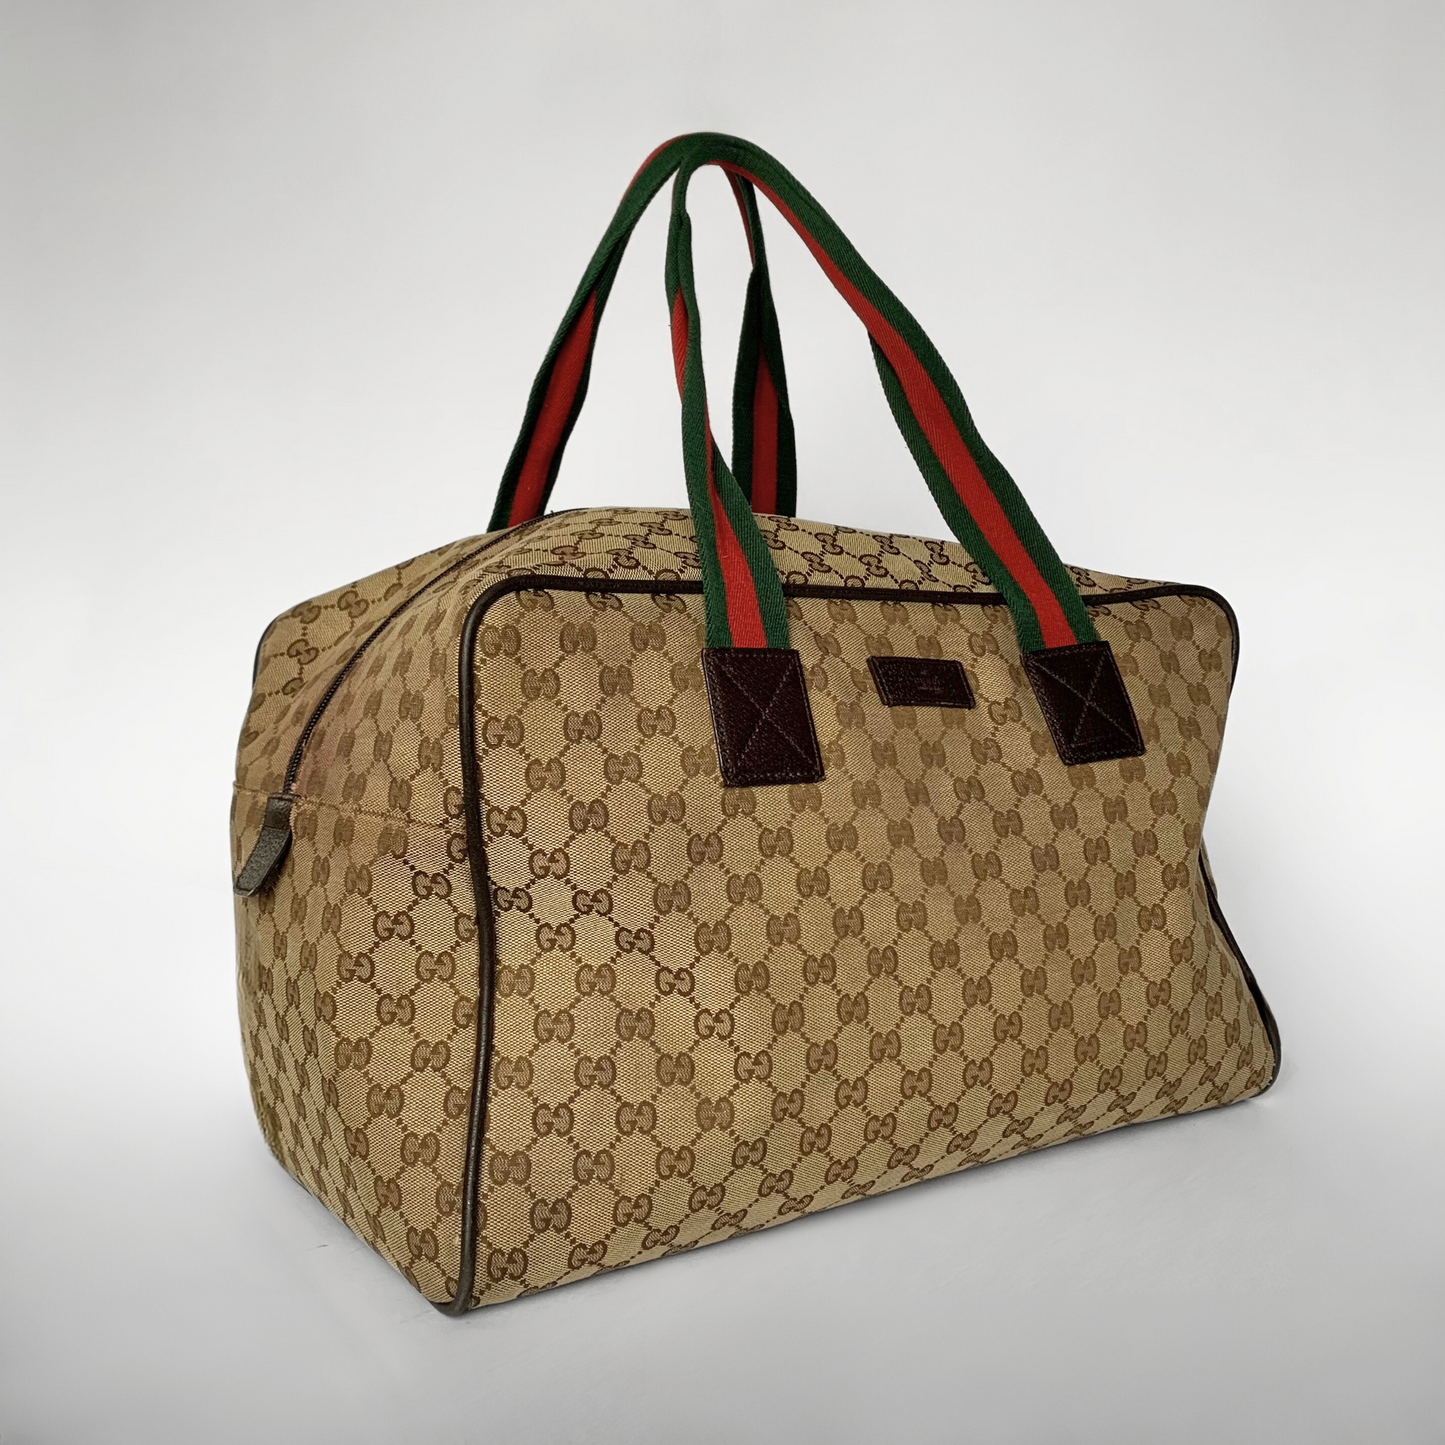 Gucci Gucci Boston Bag Monogram Toile - Sac bandoulière - Etoile Luxury Vintage